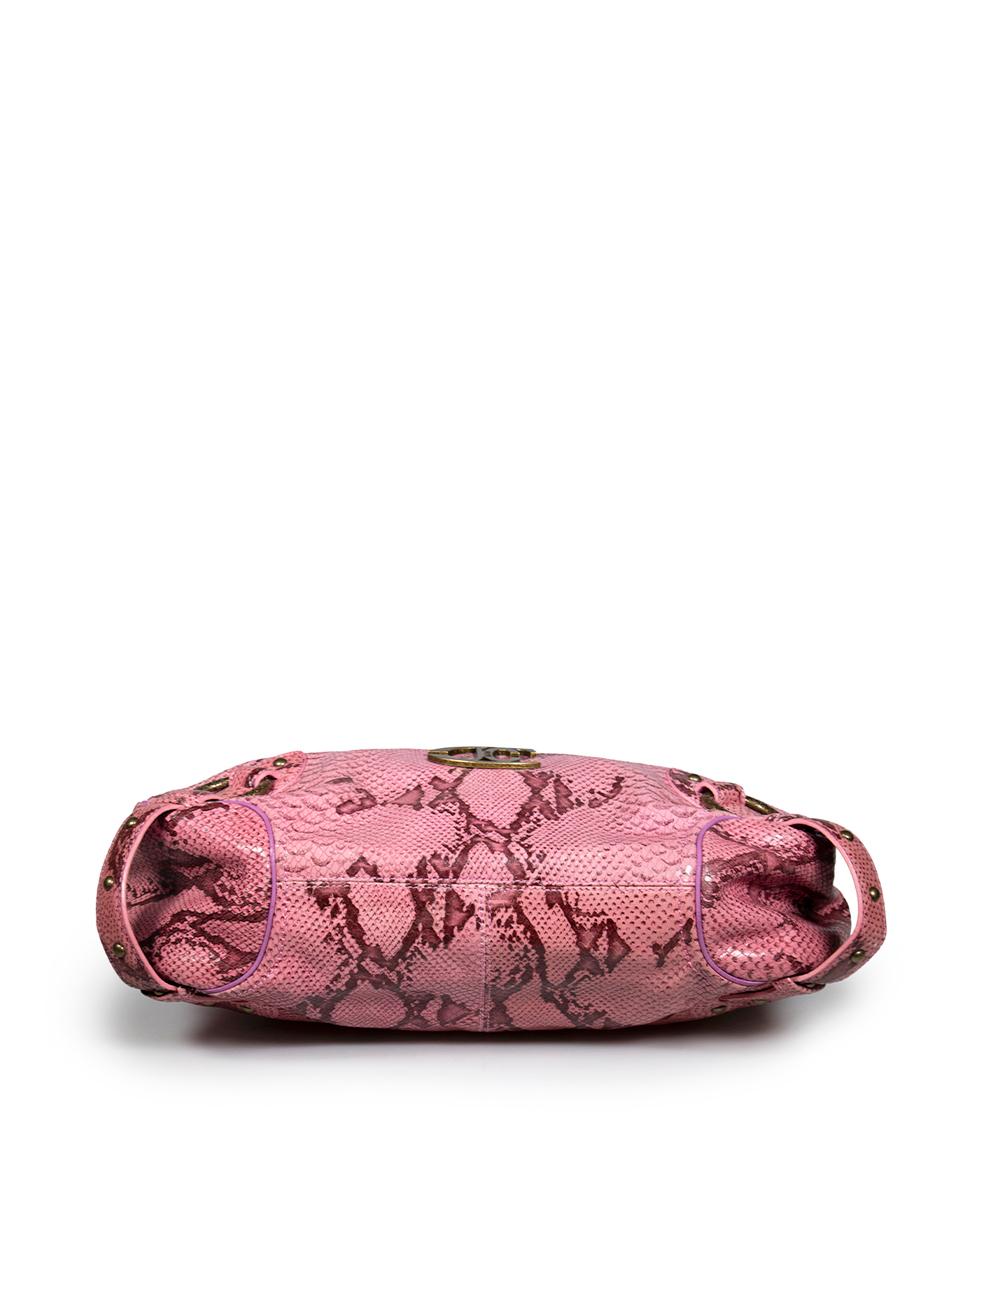 Women's Roberto Cavalli Just Cavalli Pink Snake Embossed Leather Shoulder Bag